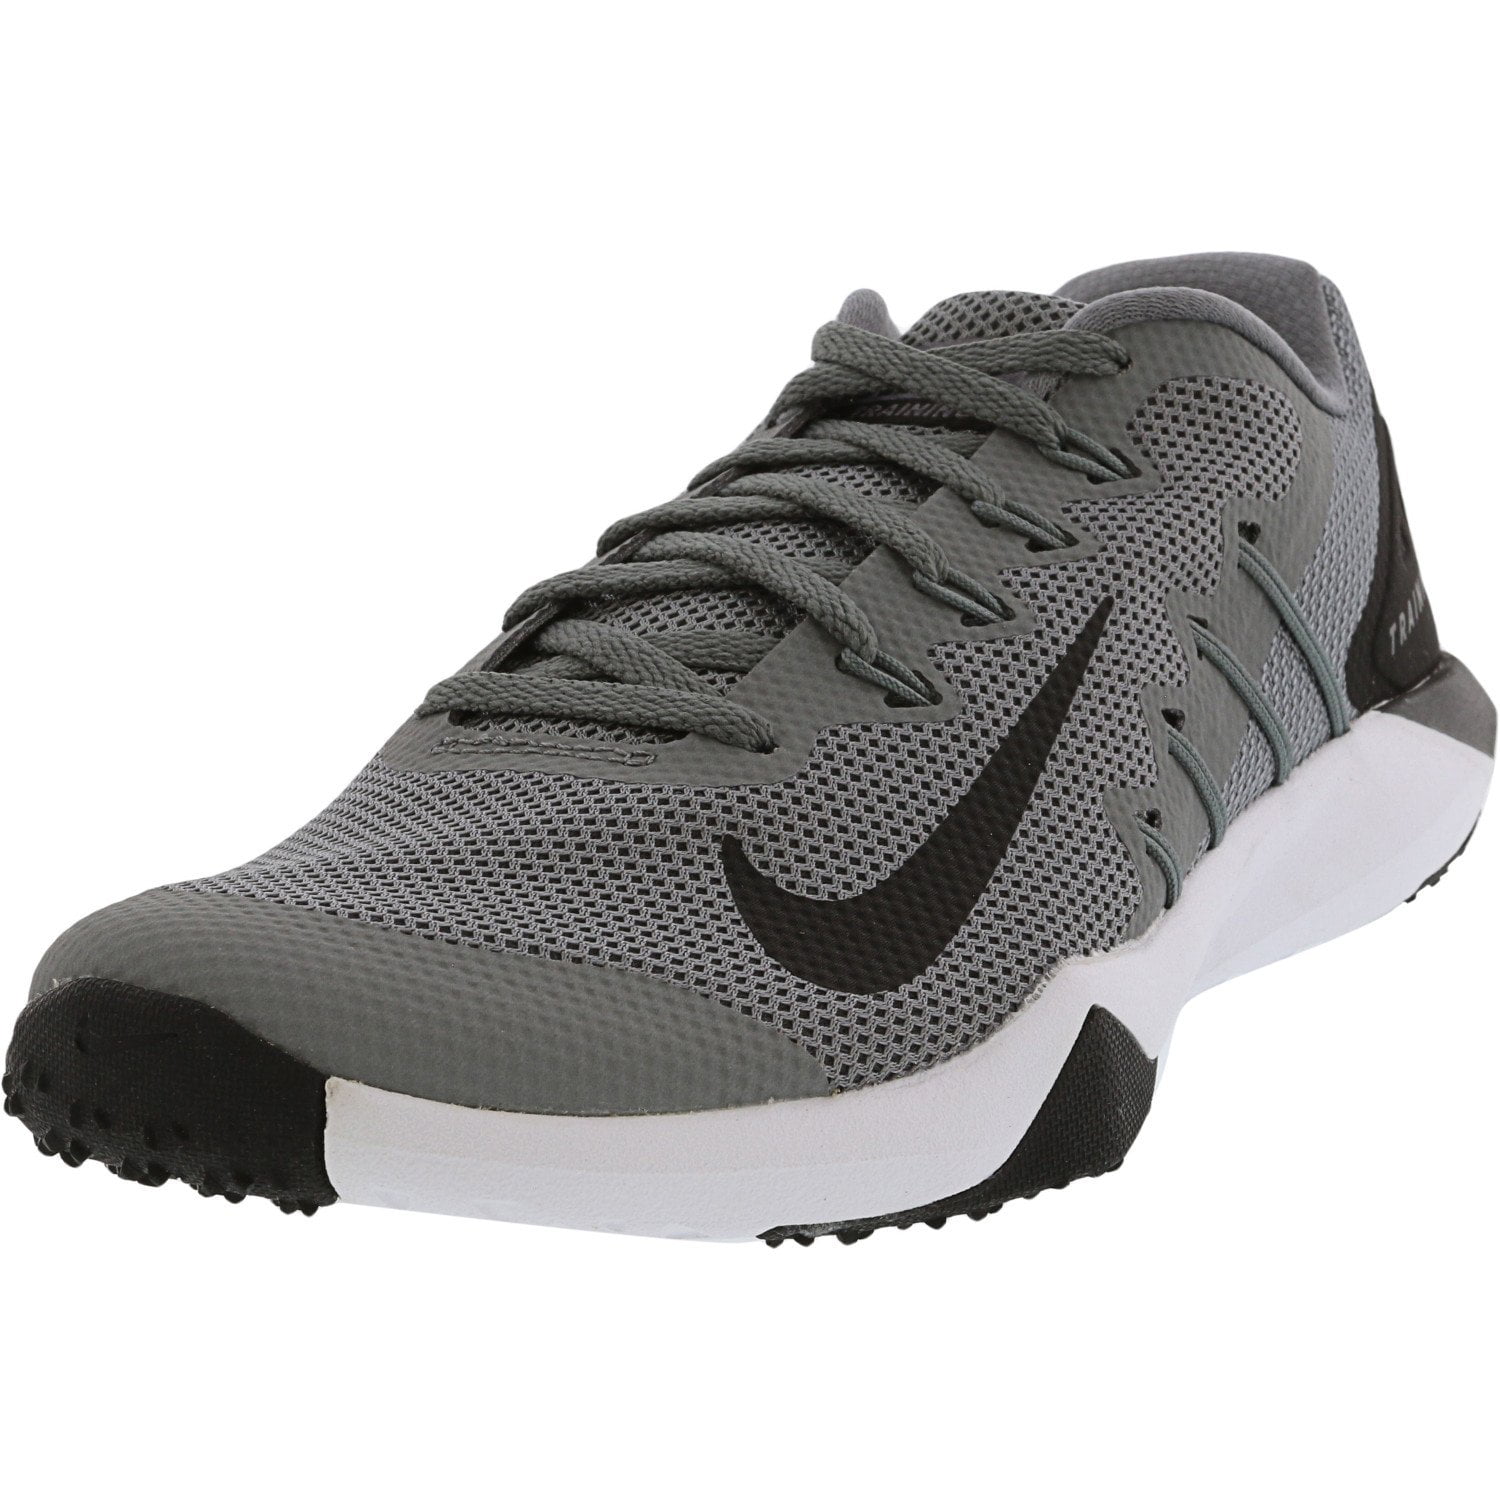 Nike Men's Retaliation Tr 2 Grey Black Wolf Ankle-High Shoes - 10.5M Walmart.com